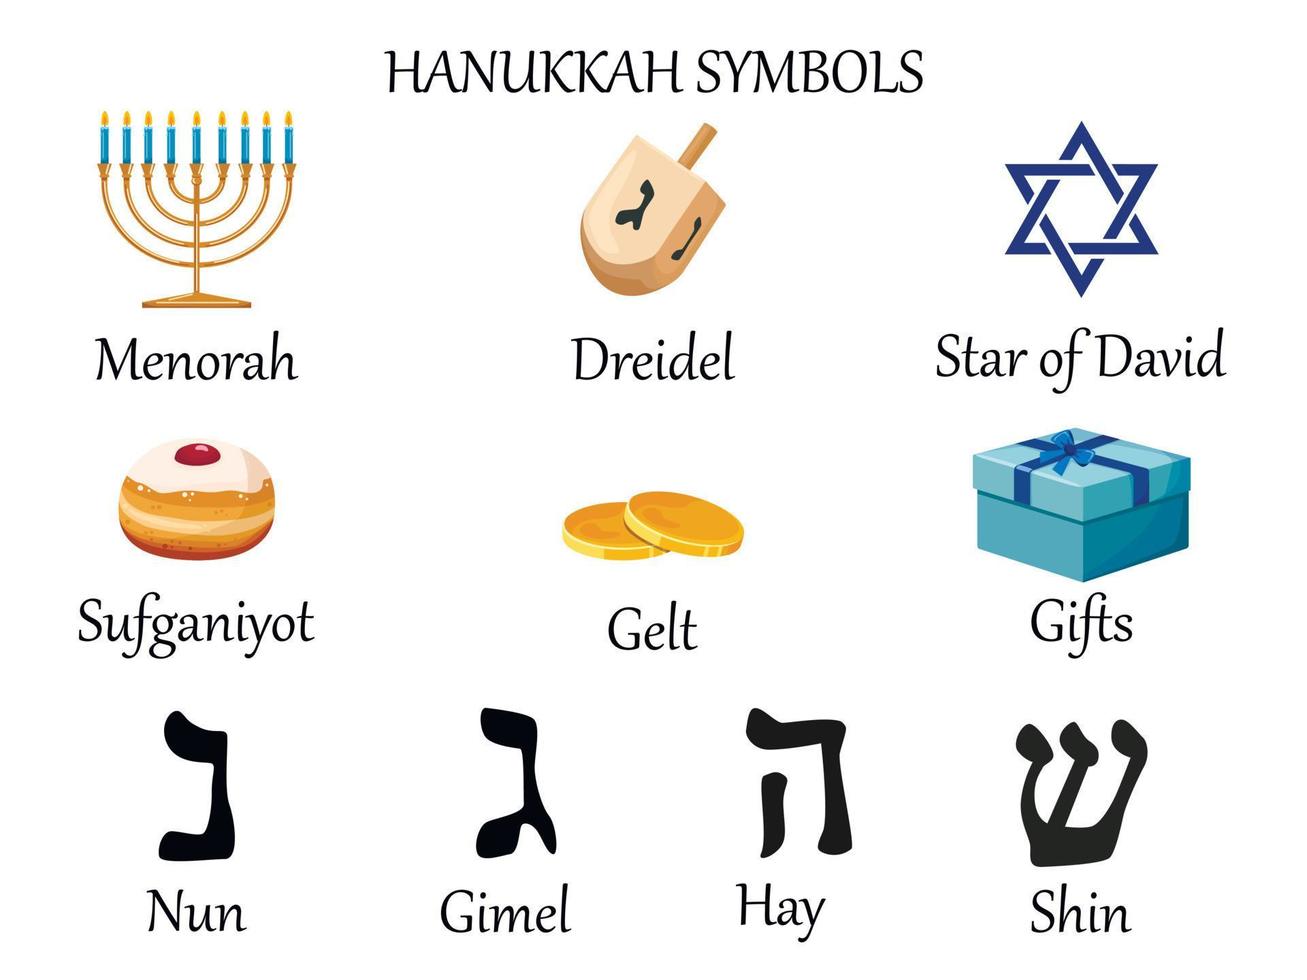 Hanukkah symbols. Collection of colorful Hanukkah cartoon symbols with menorah, dreidel, gelt, star of David, gift, sufganiyot and letters of the Hebrew alphabet vector